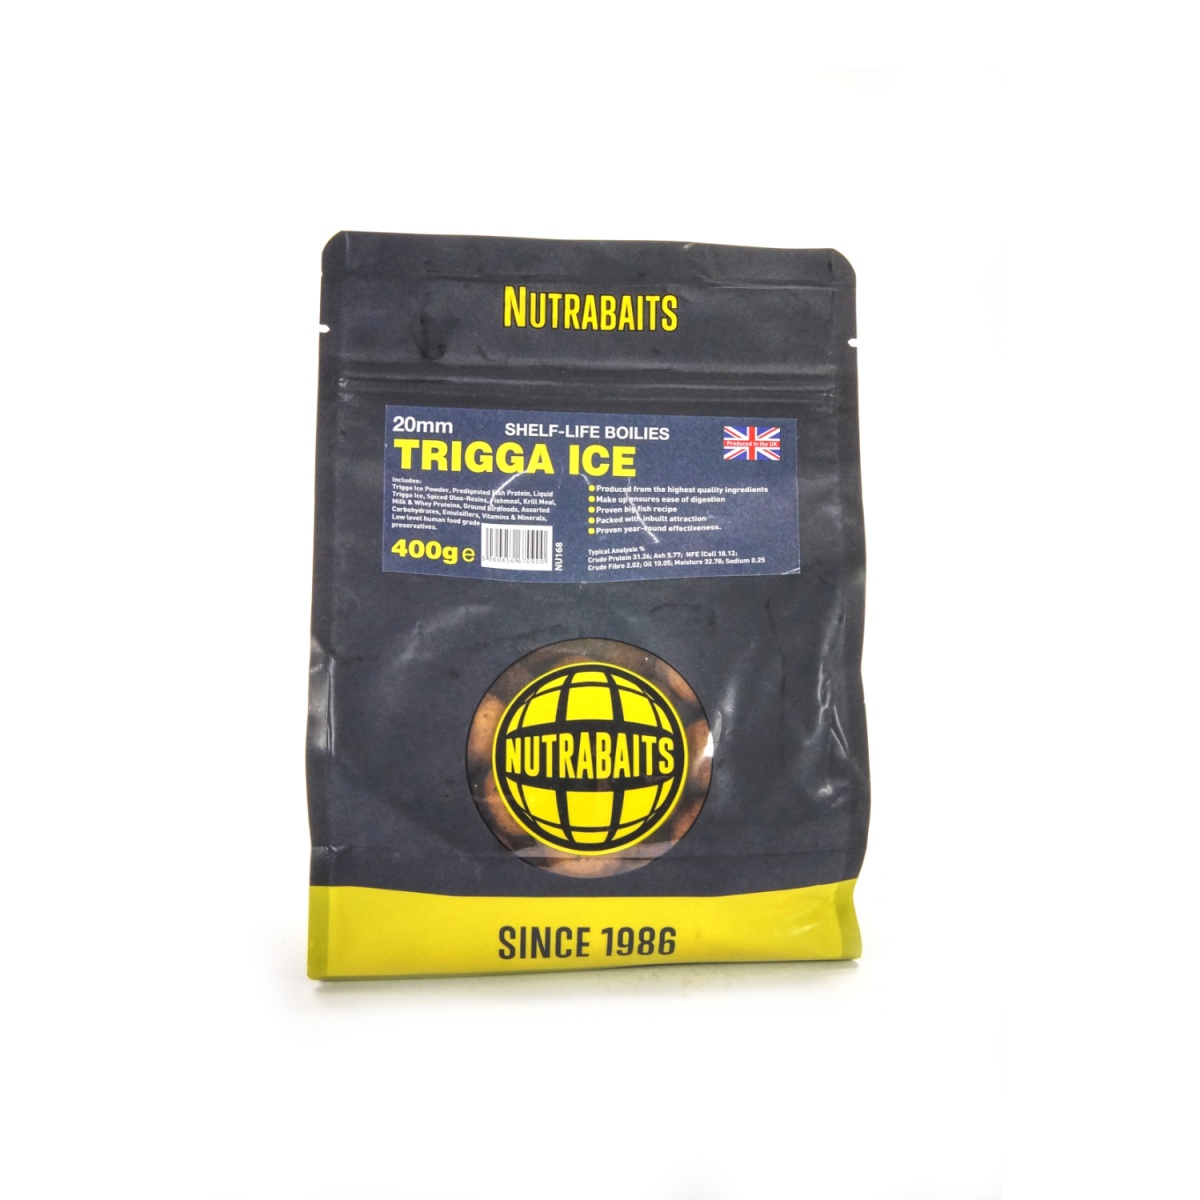 Nutrabaits Trigga Ice Shelf Life Boilies 20mm / 400g rozmiar/ opakowanie